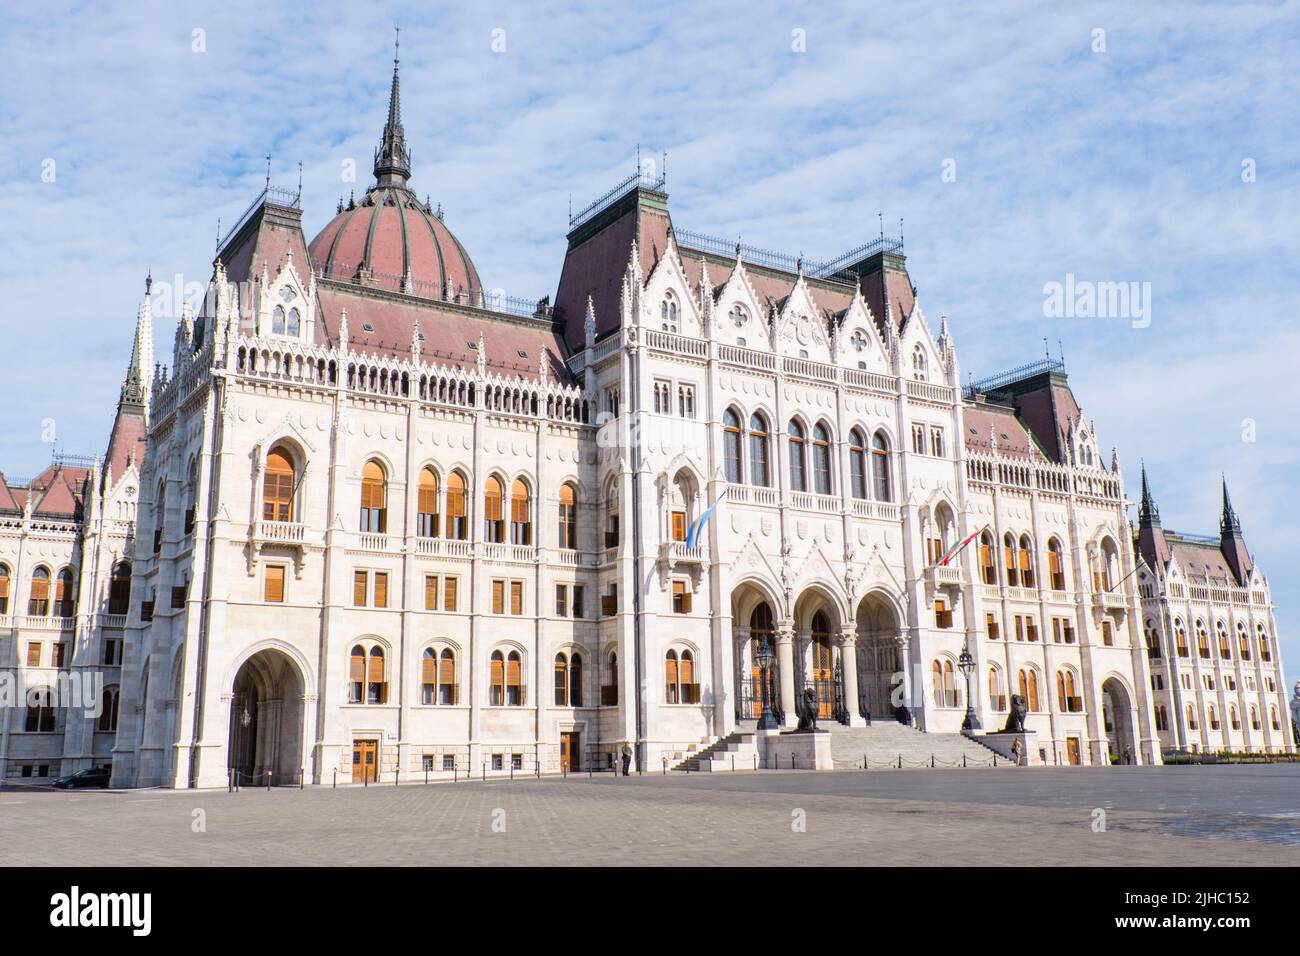 Országház, edificio del Parlamento, Kossuth Lajos ter, Budapest, Hungría Foto de stock